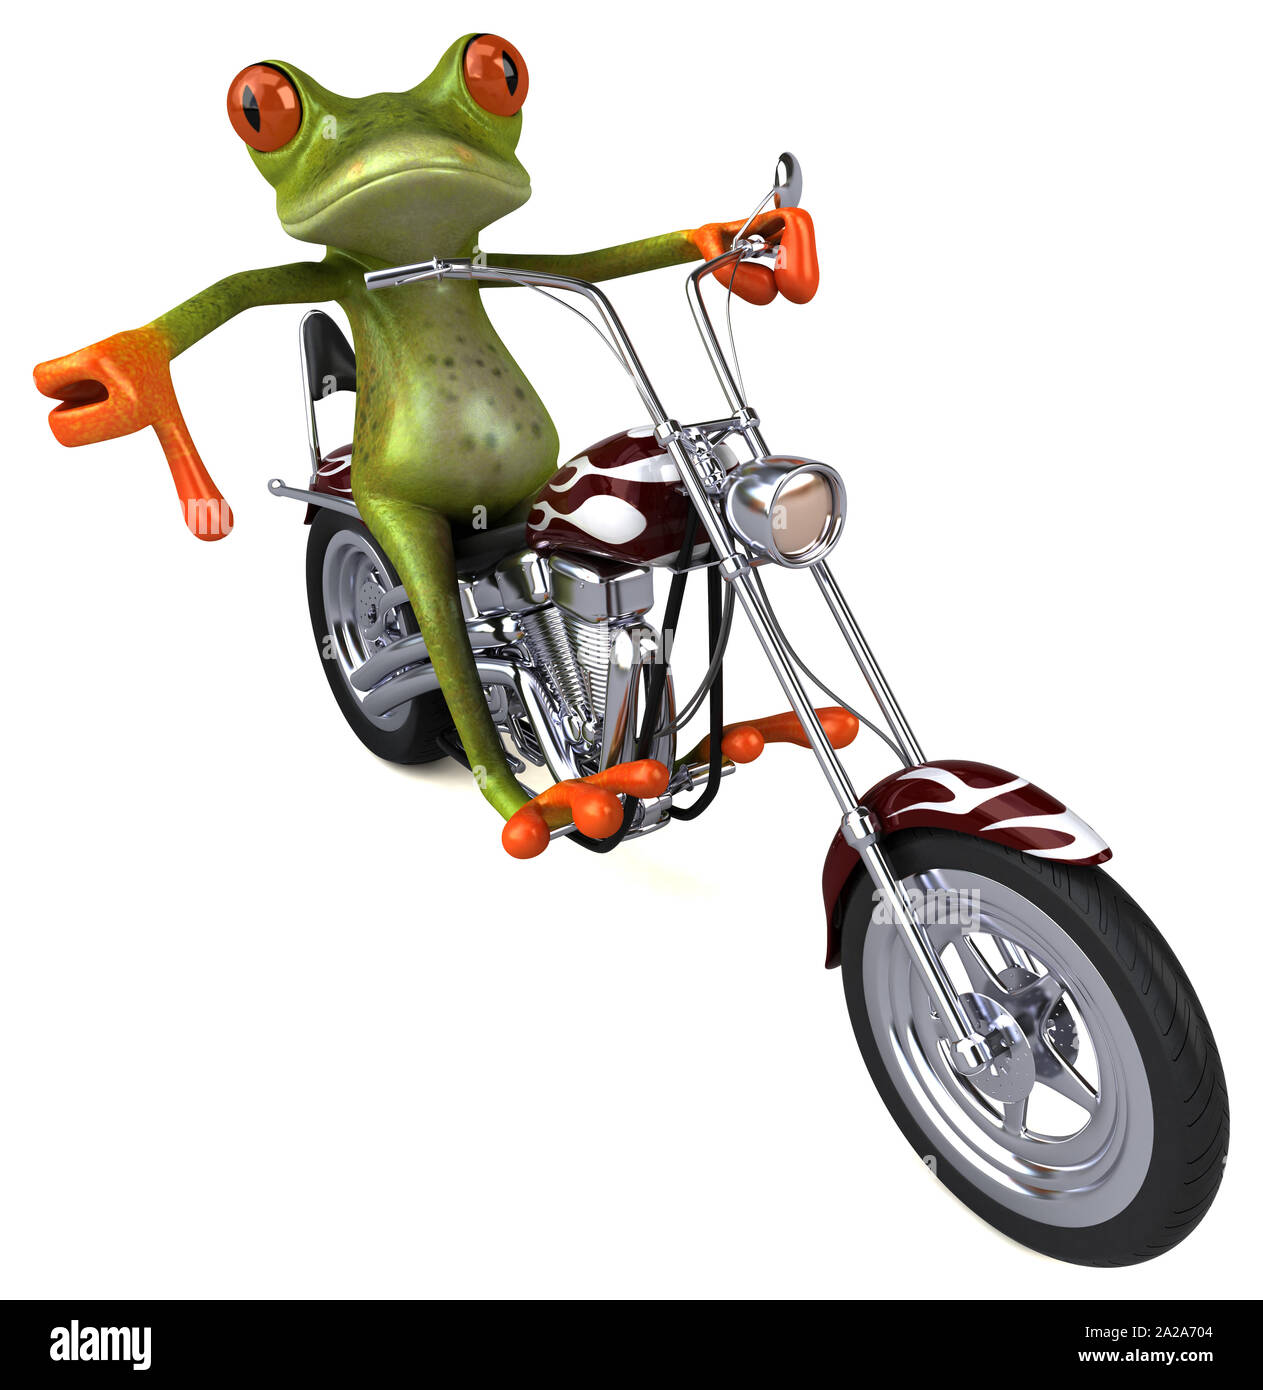 Fun grenouille sur une moto - 3D Illustration Photo Stock - Alamy